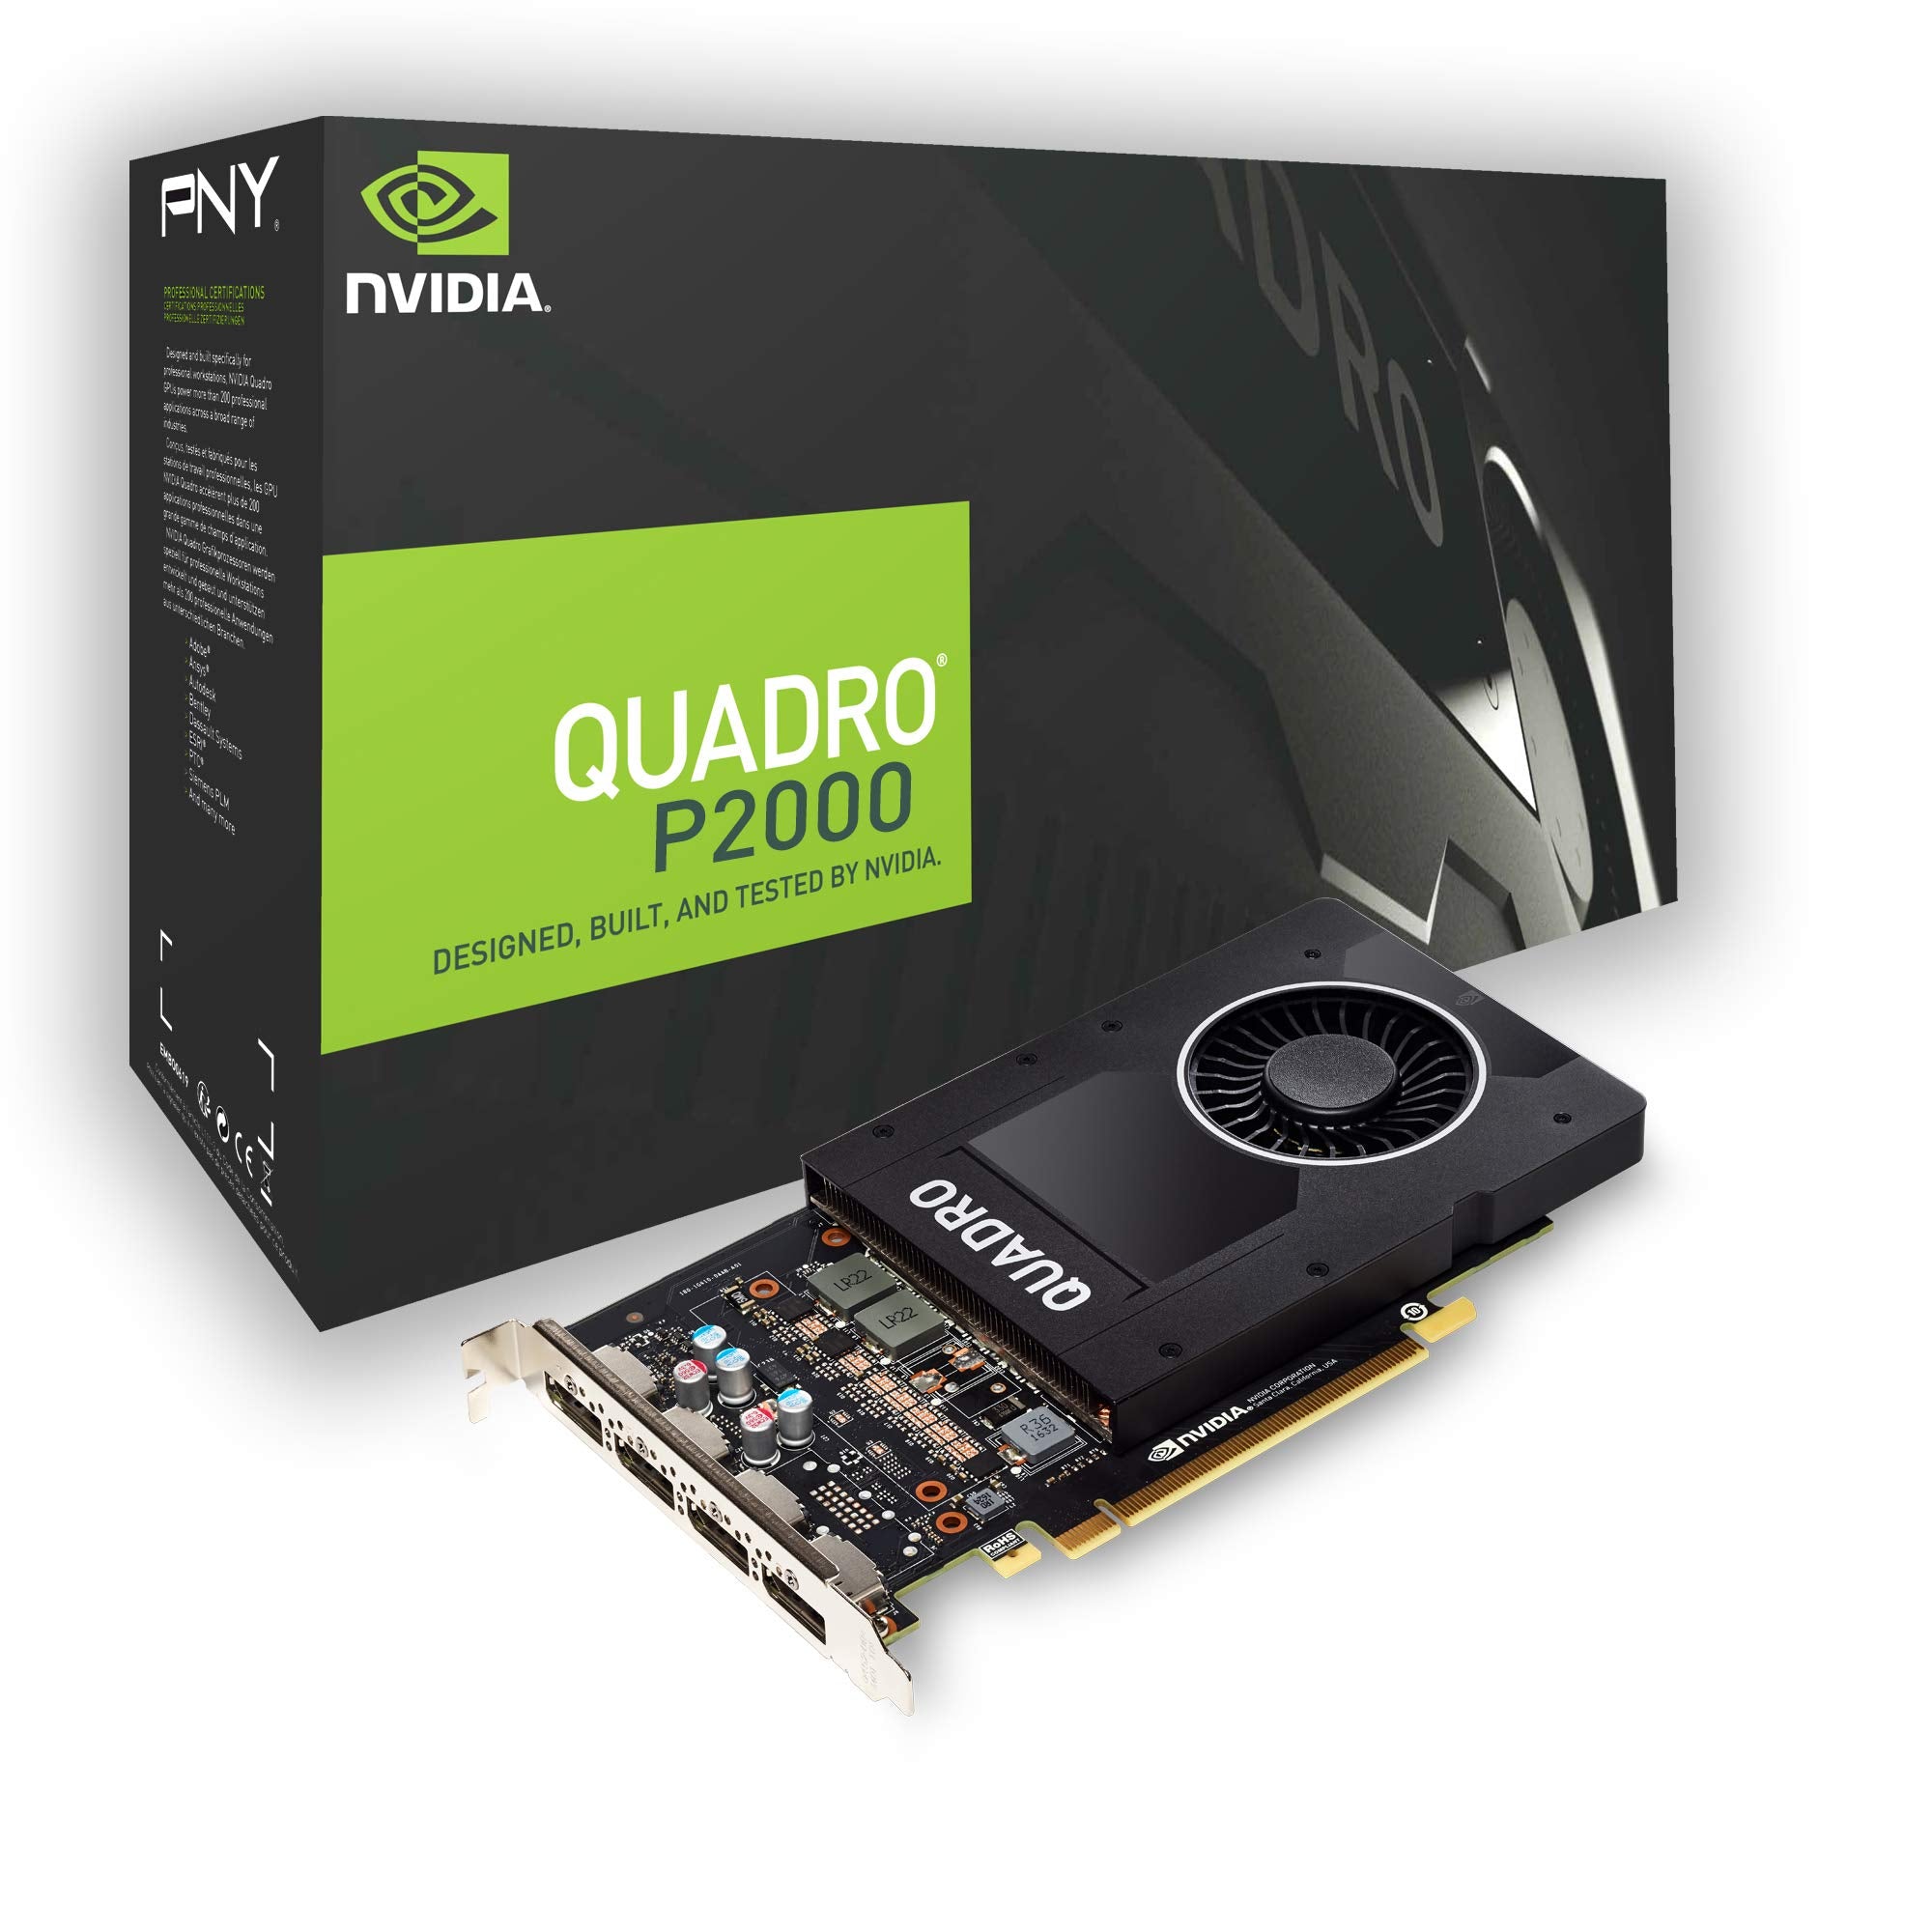 PNY NVIDIA Quadro P2000 4x DP 5 GB GDDR5 PCI Express Professional Graphic Card - Black (Refurbished)